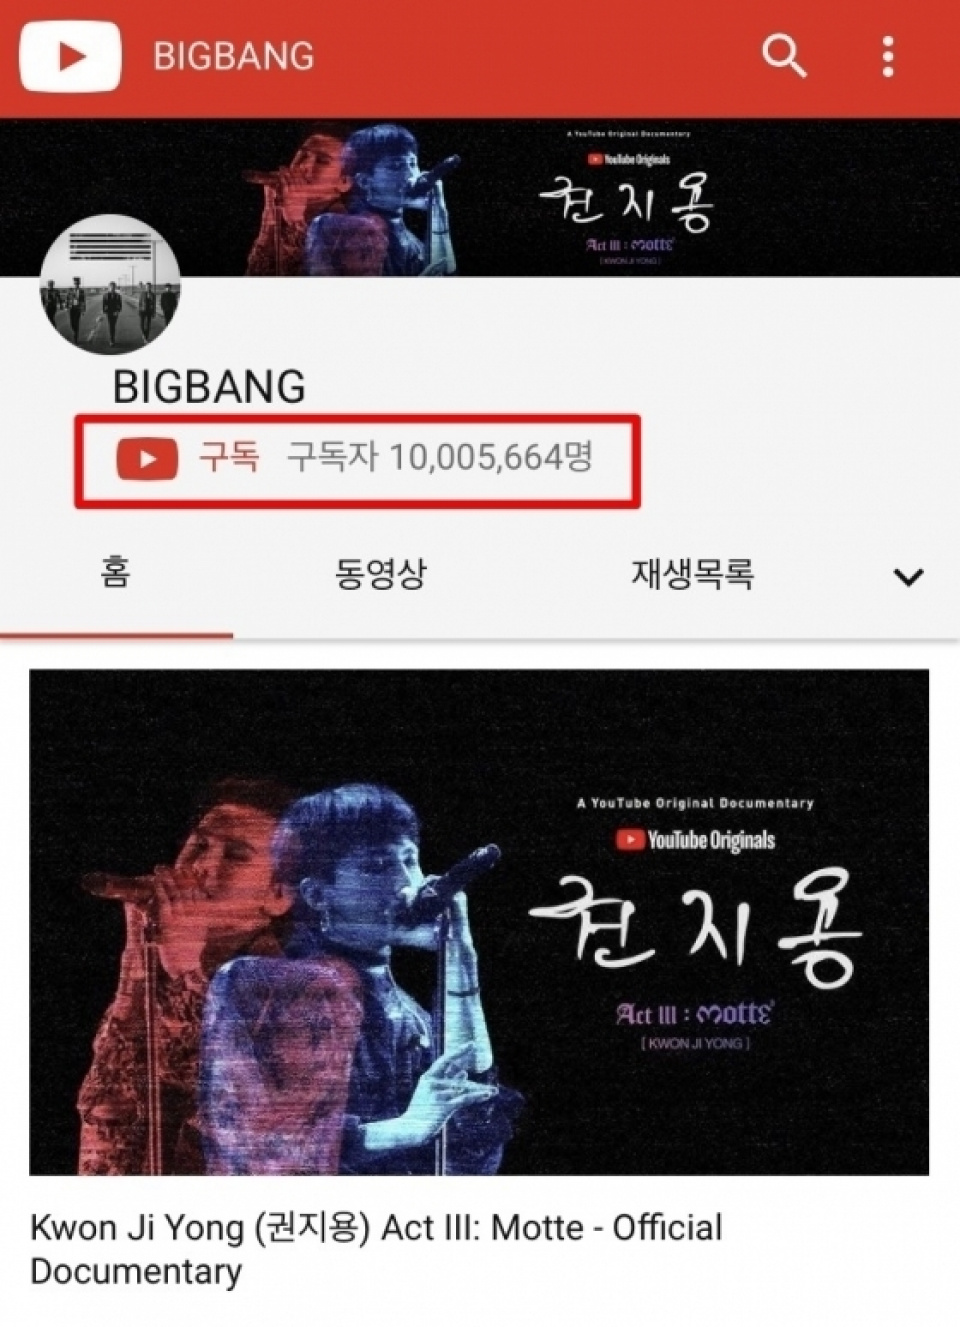 BIGBANG、YouTube登録者数が1000万人突破